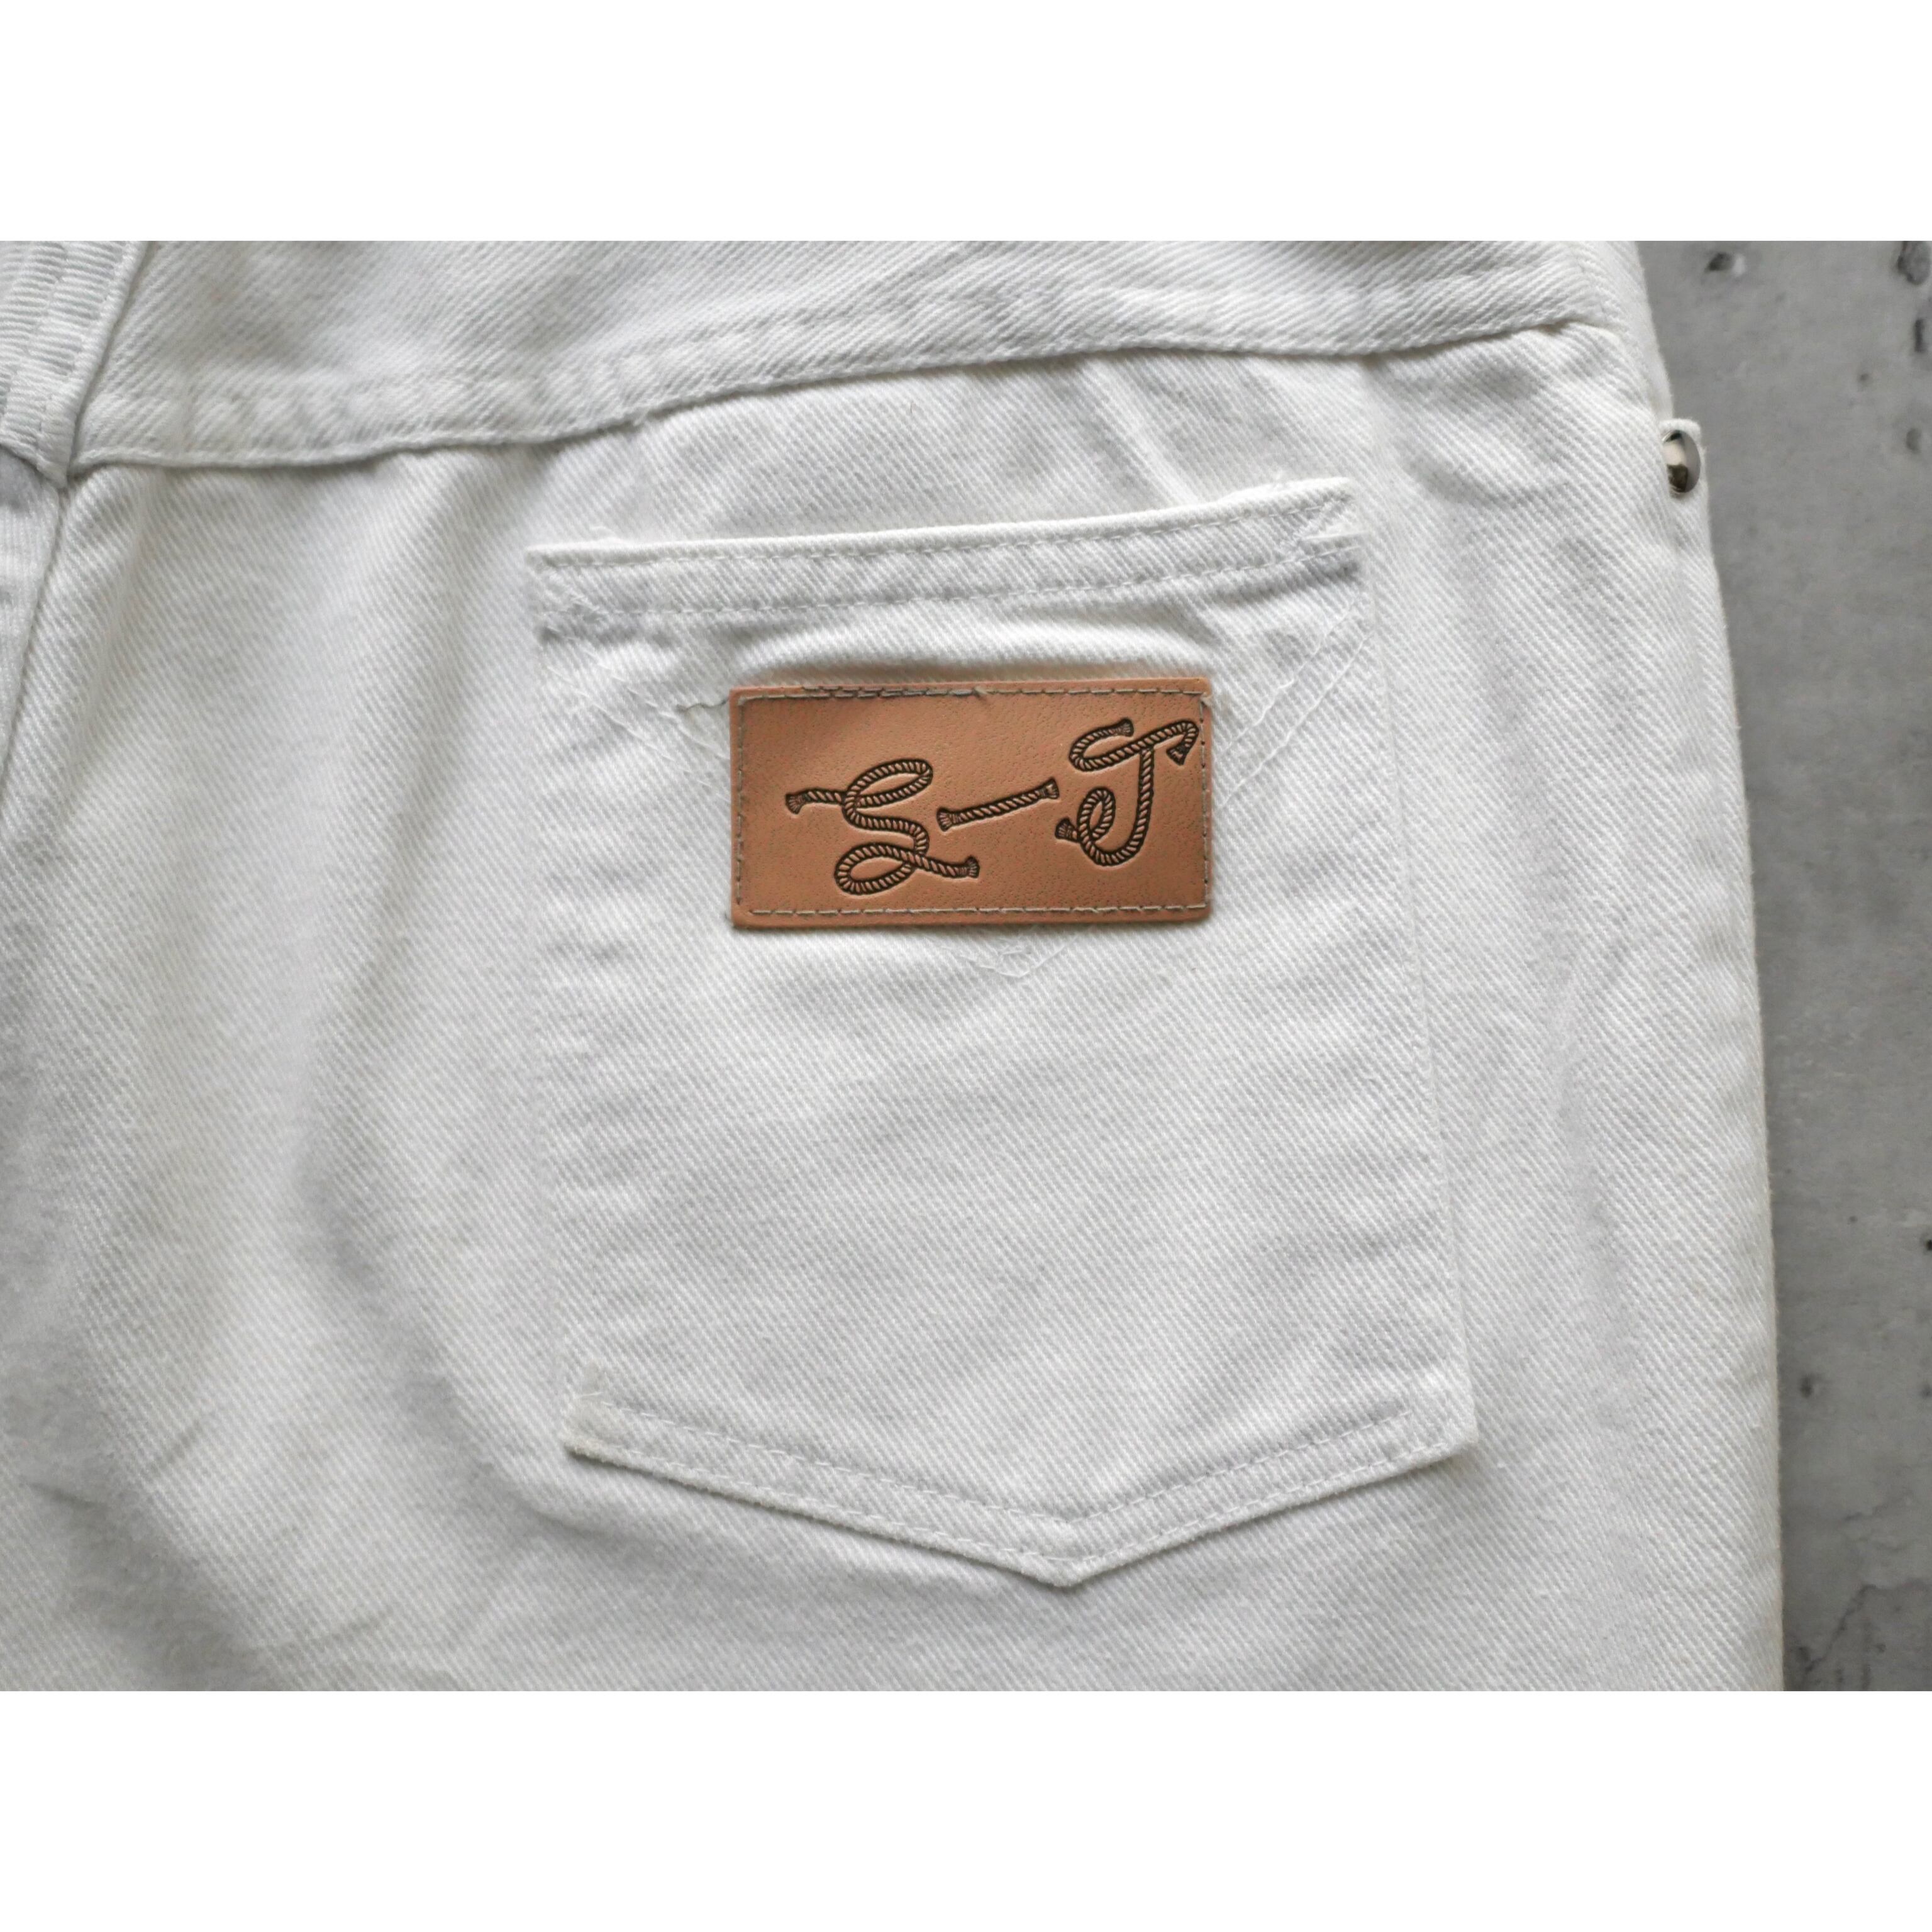 70s sears jr. bazaar flare pants white シアーズジュニアバザール